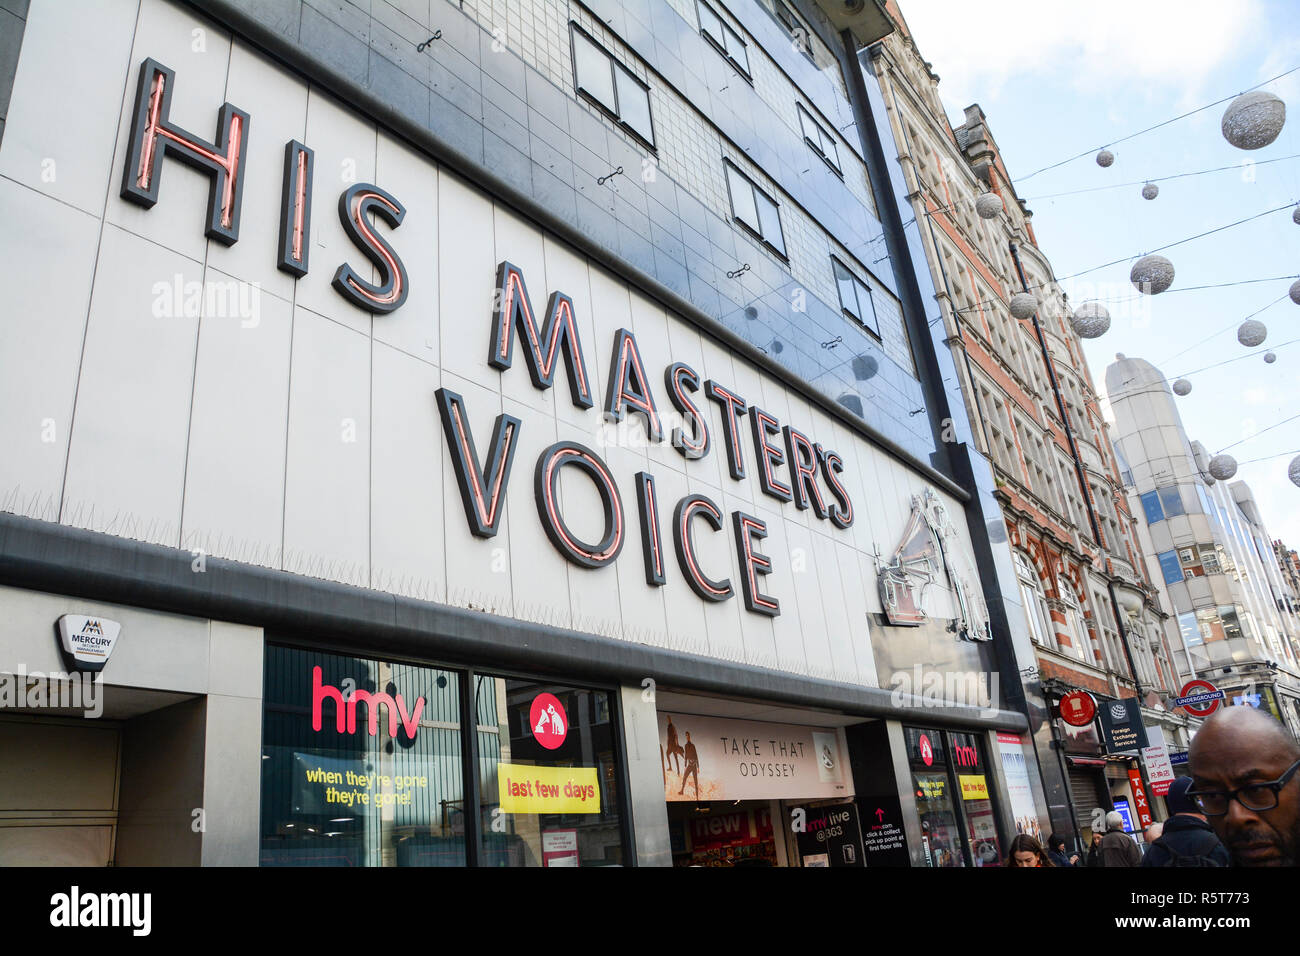 His Masters Voice (HMV) flagship record store, 363 Oxford Street, London, UK Stock Photo